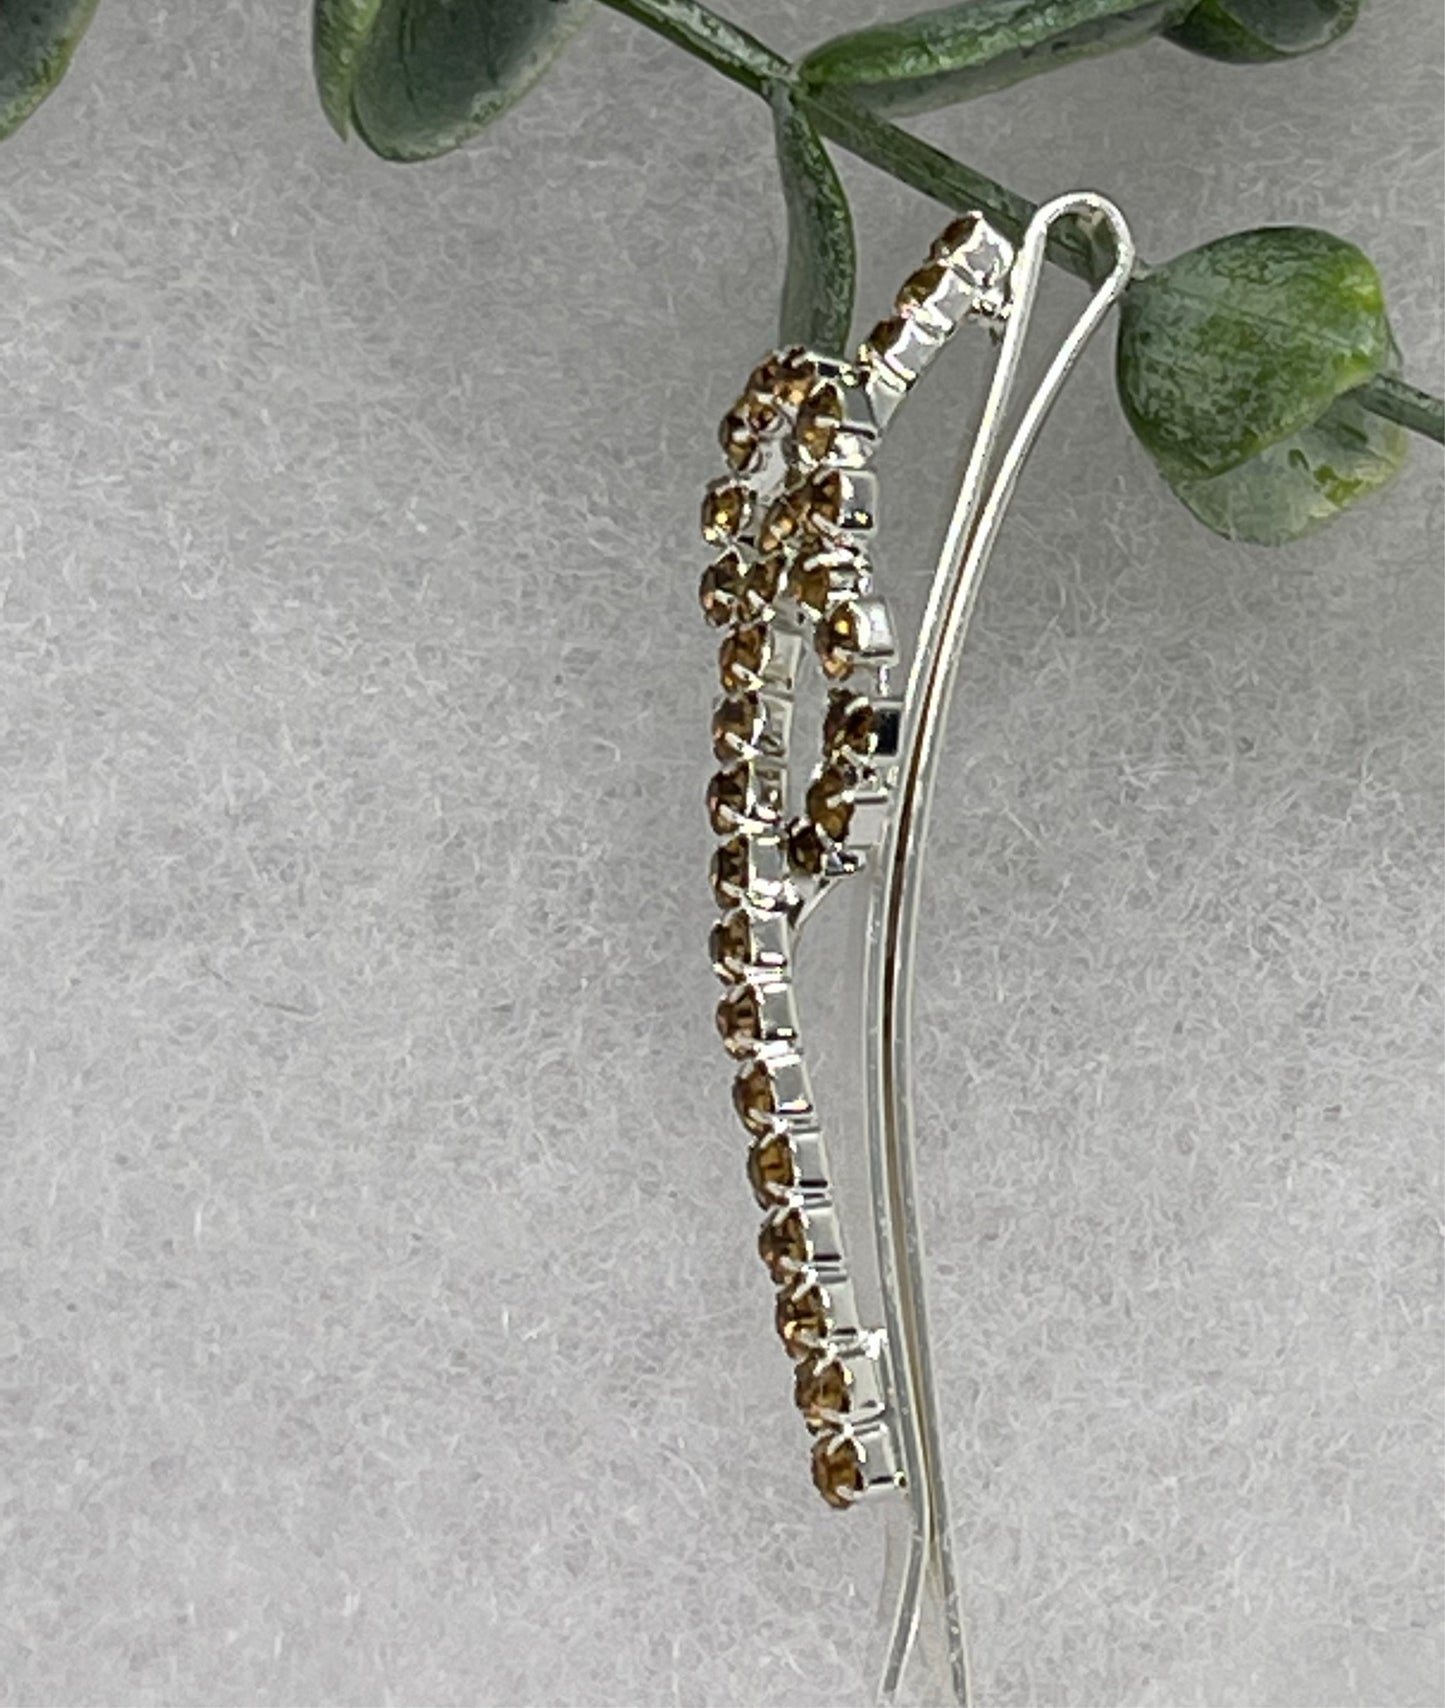 Gold eternal rings Crystal Rhinestone hair pin silver tone approx2.5” bridesmaid wedding formal princess accessory accessories